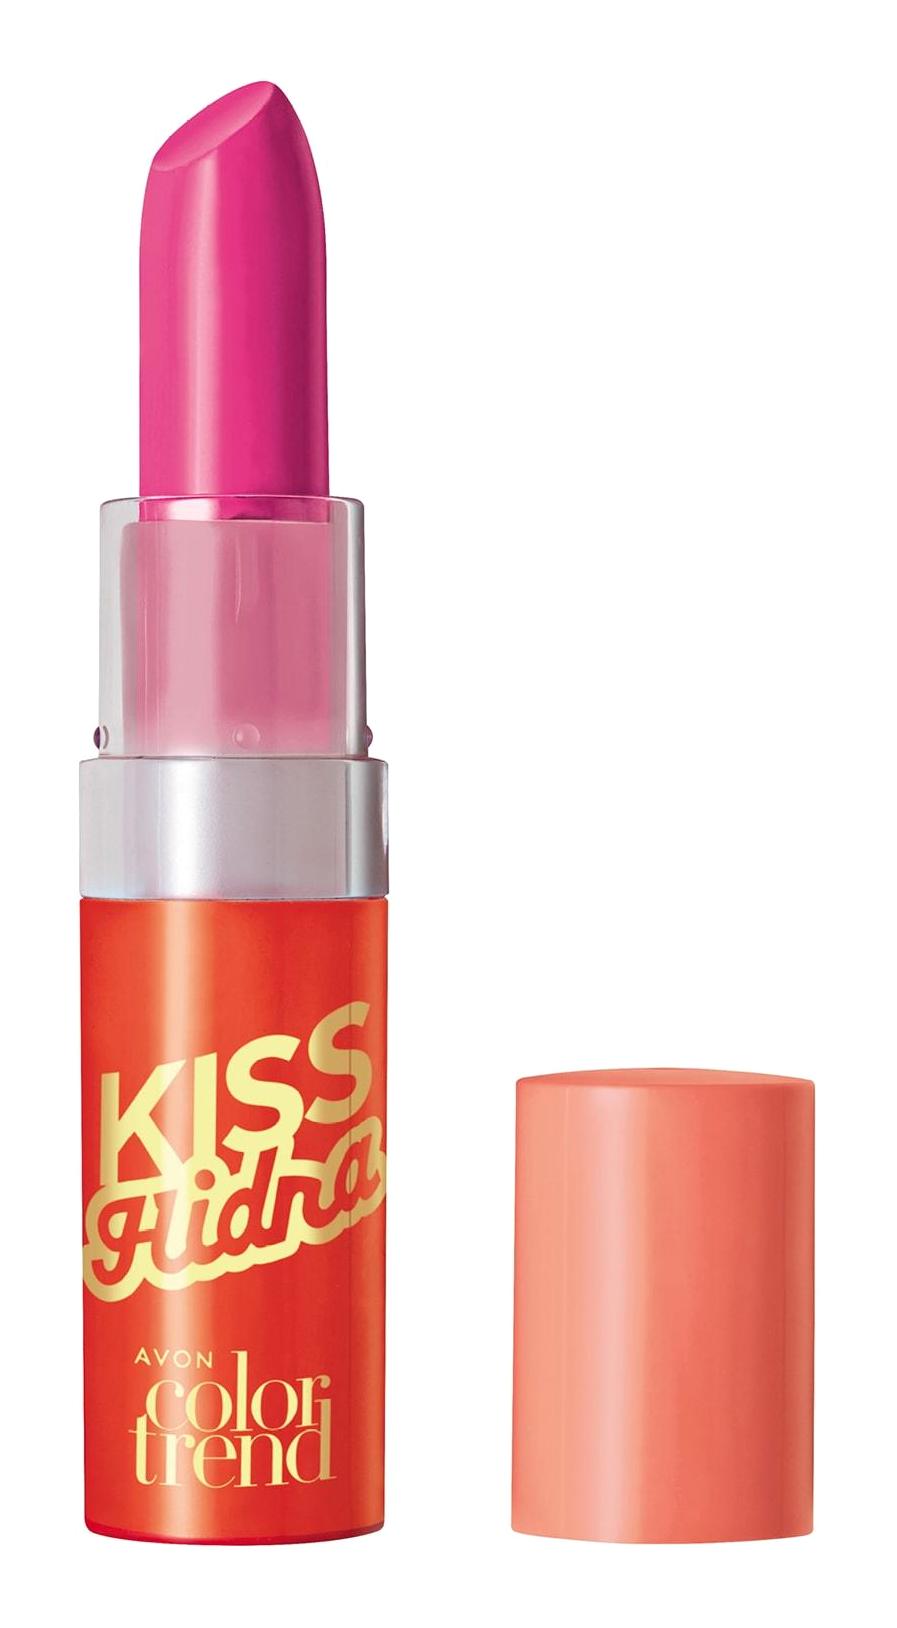 Avon Doll Pink Kalıcı Saten Krem Lipstick Ruj